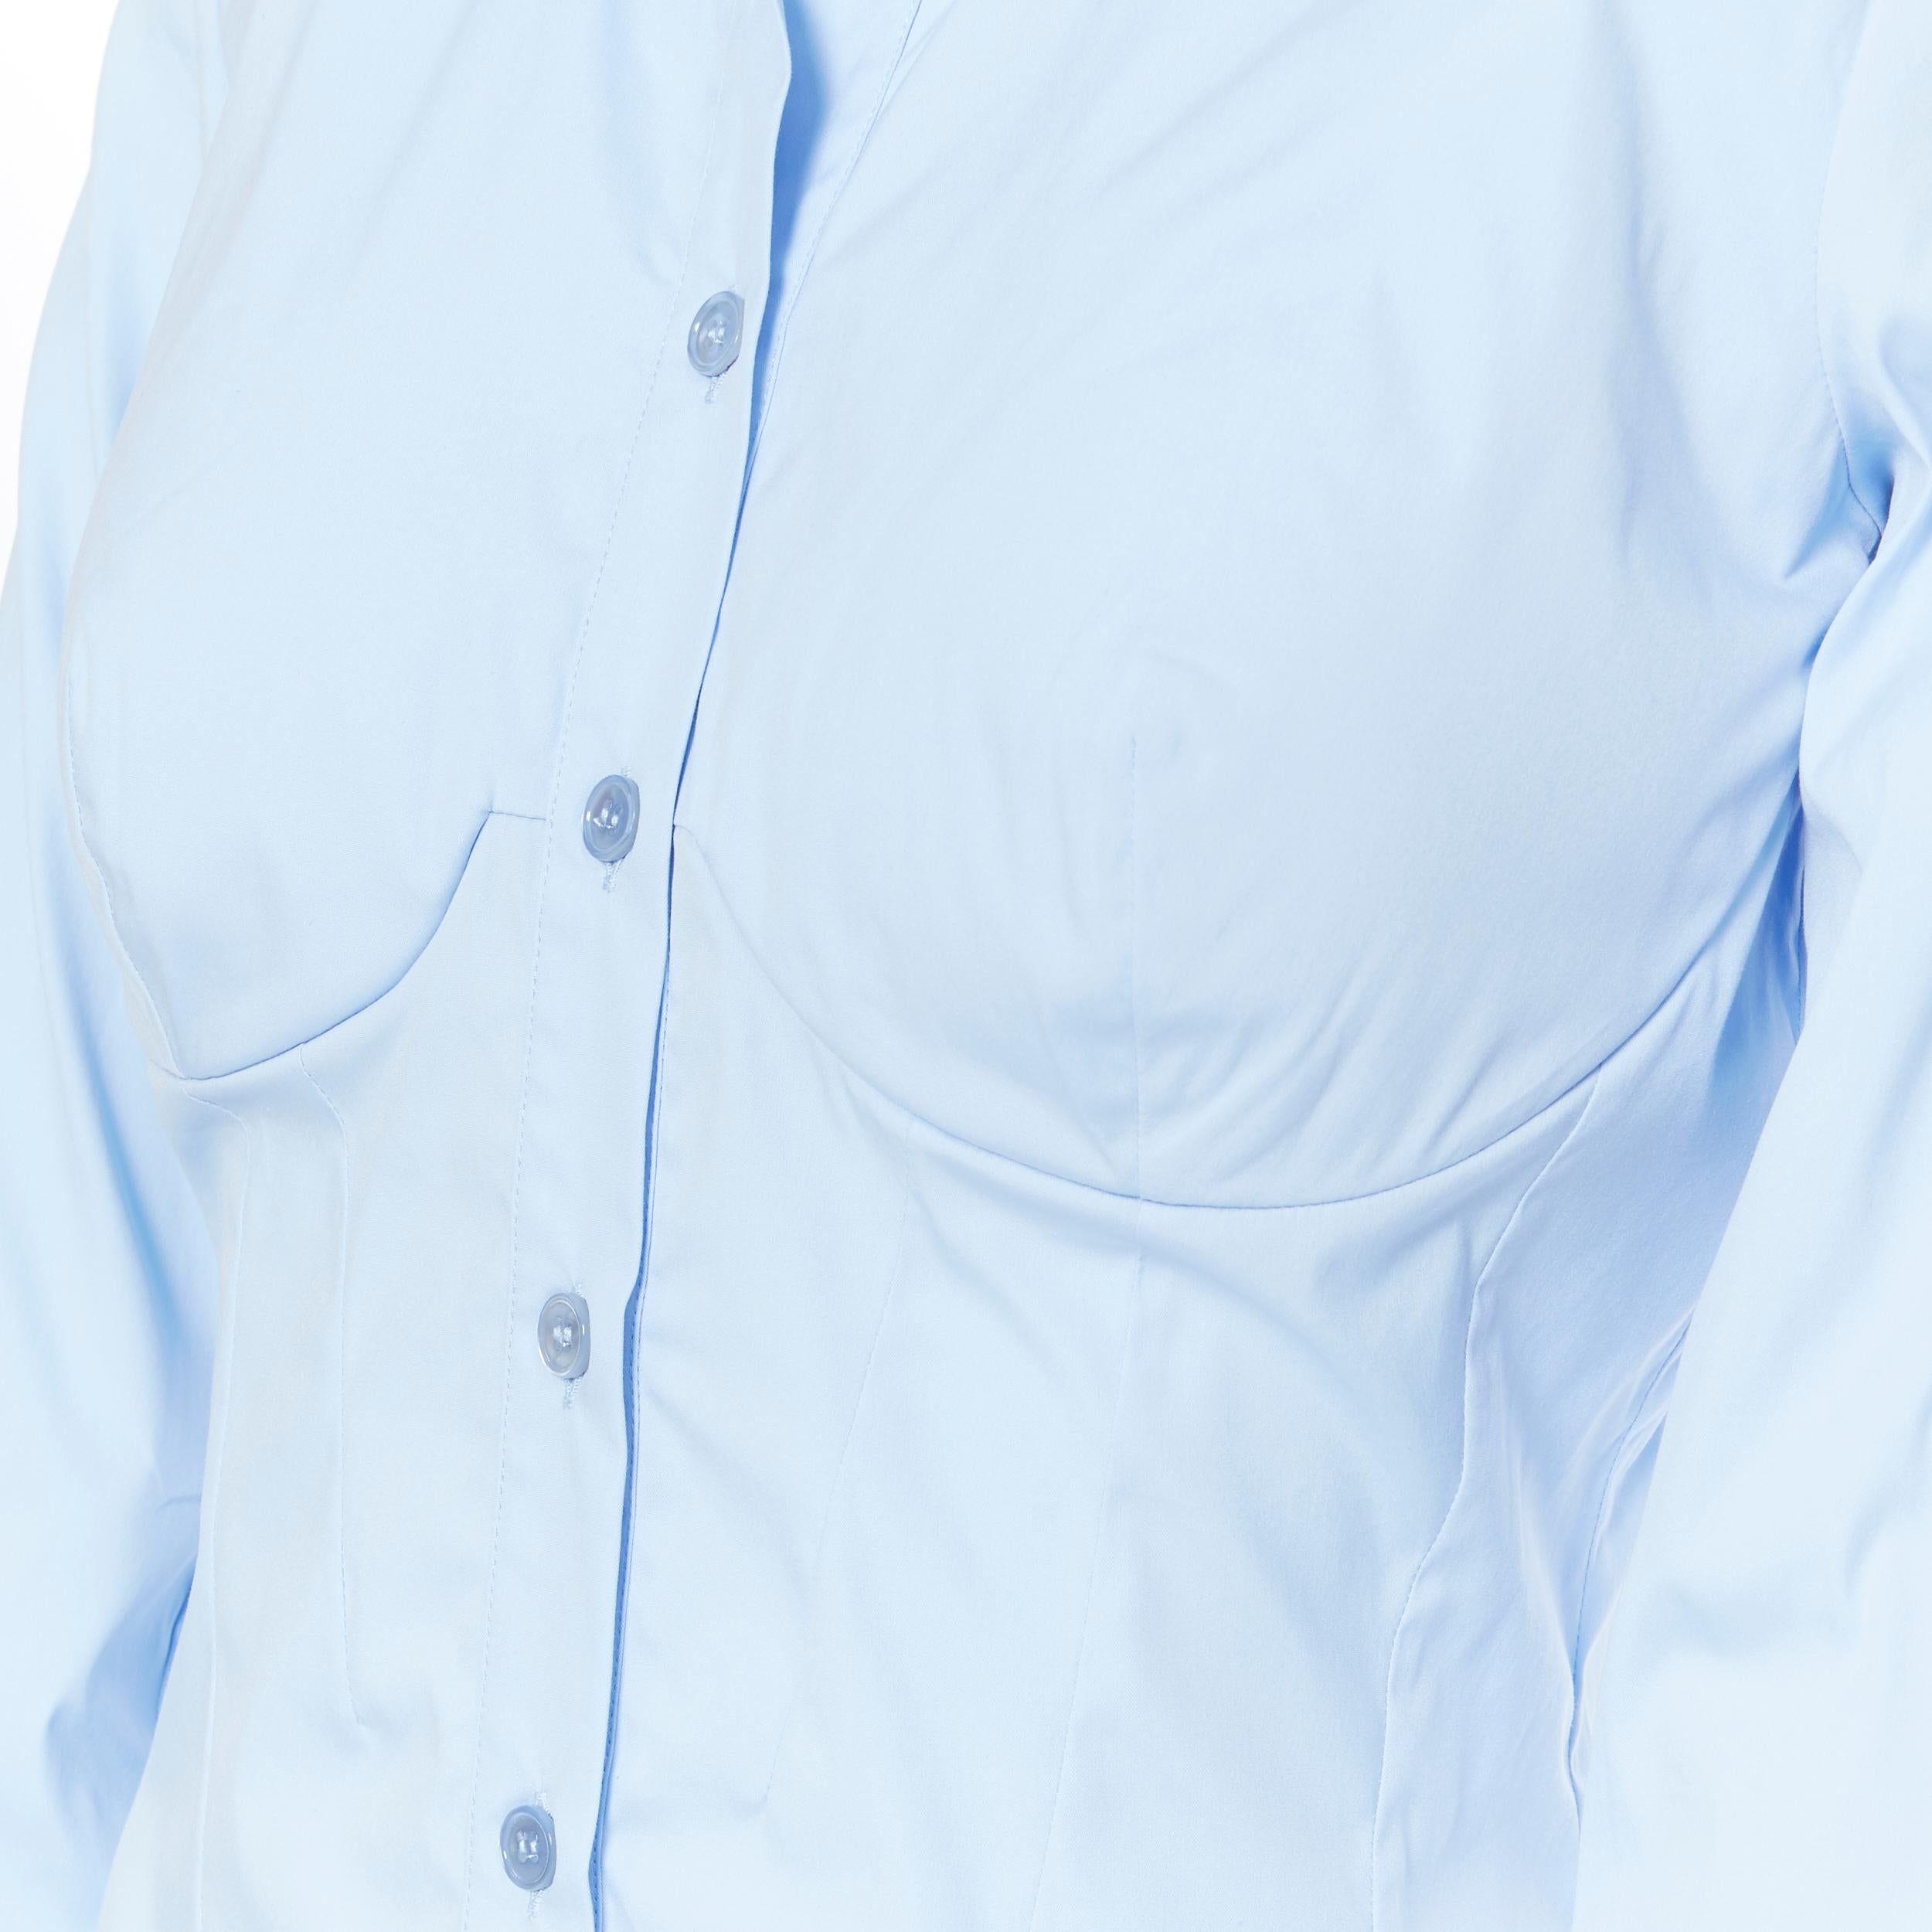 new LA PERLA SS17 Runway Corset bustier light blue stretch cotton shirt IT42 B
Brand: La Perla
Collection: Spring Summer 2017
Model Name / Style: Corset shirt
Material: Cotton blend
Color: Blue
Pattern: Solid
Closure: Button
Extra Detail: Corset